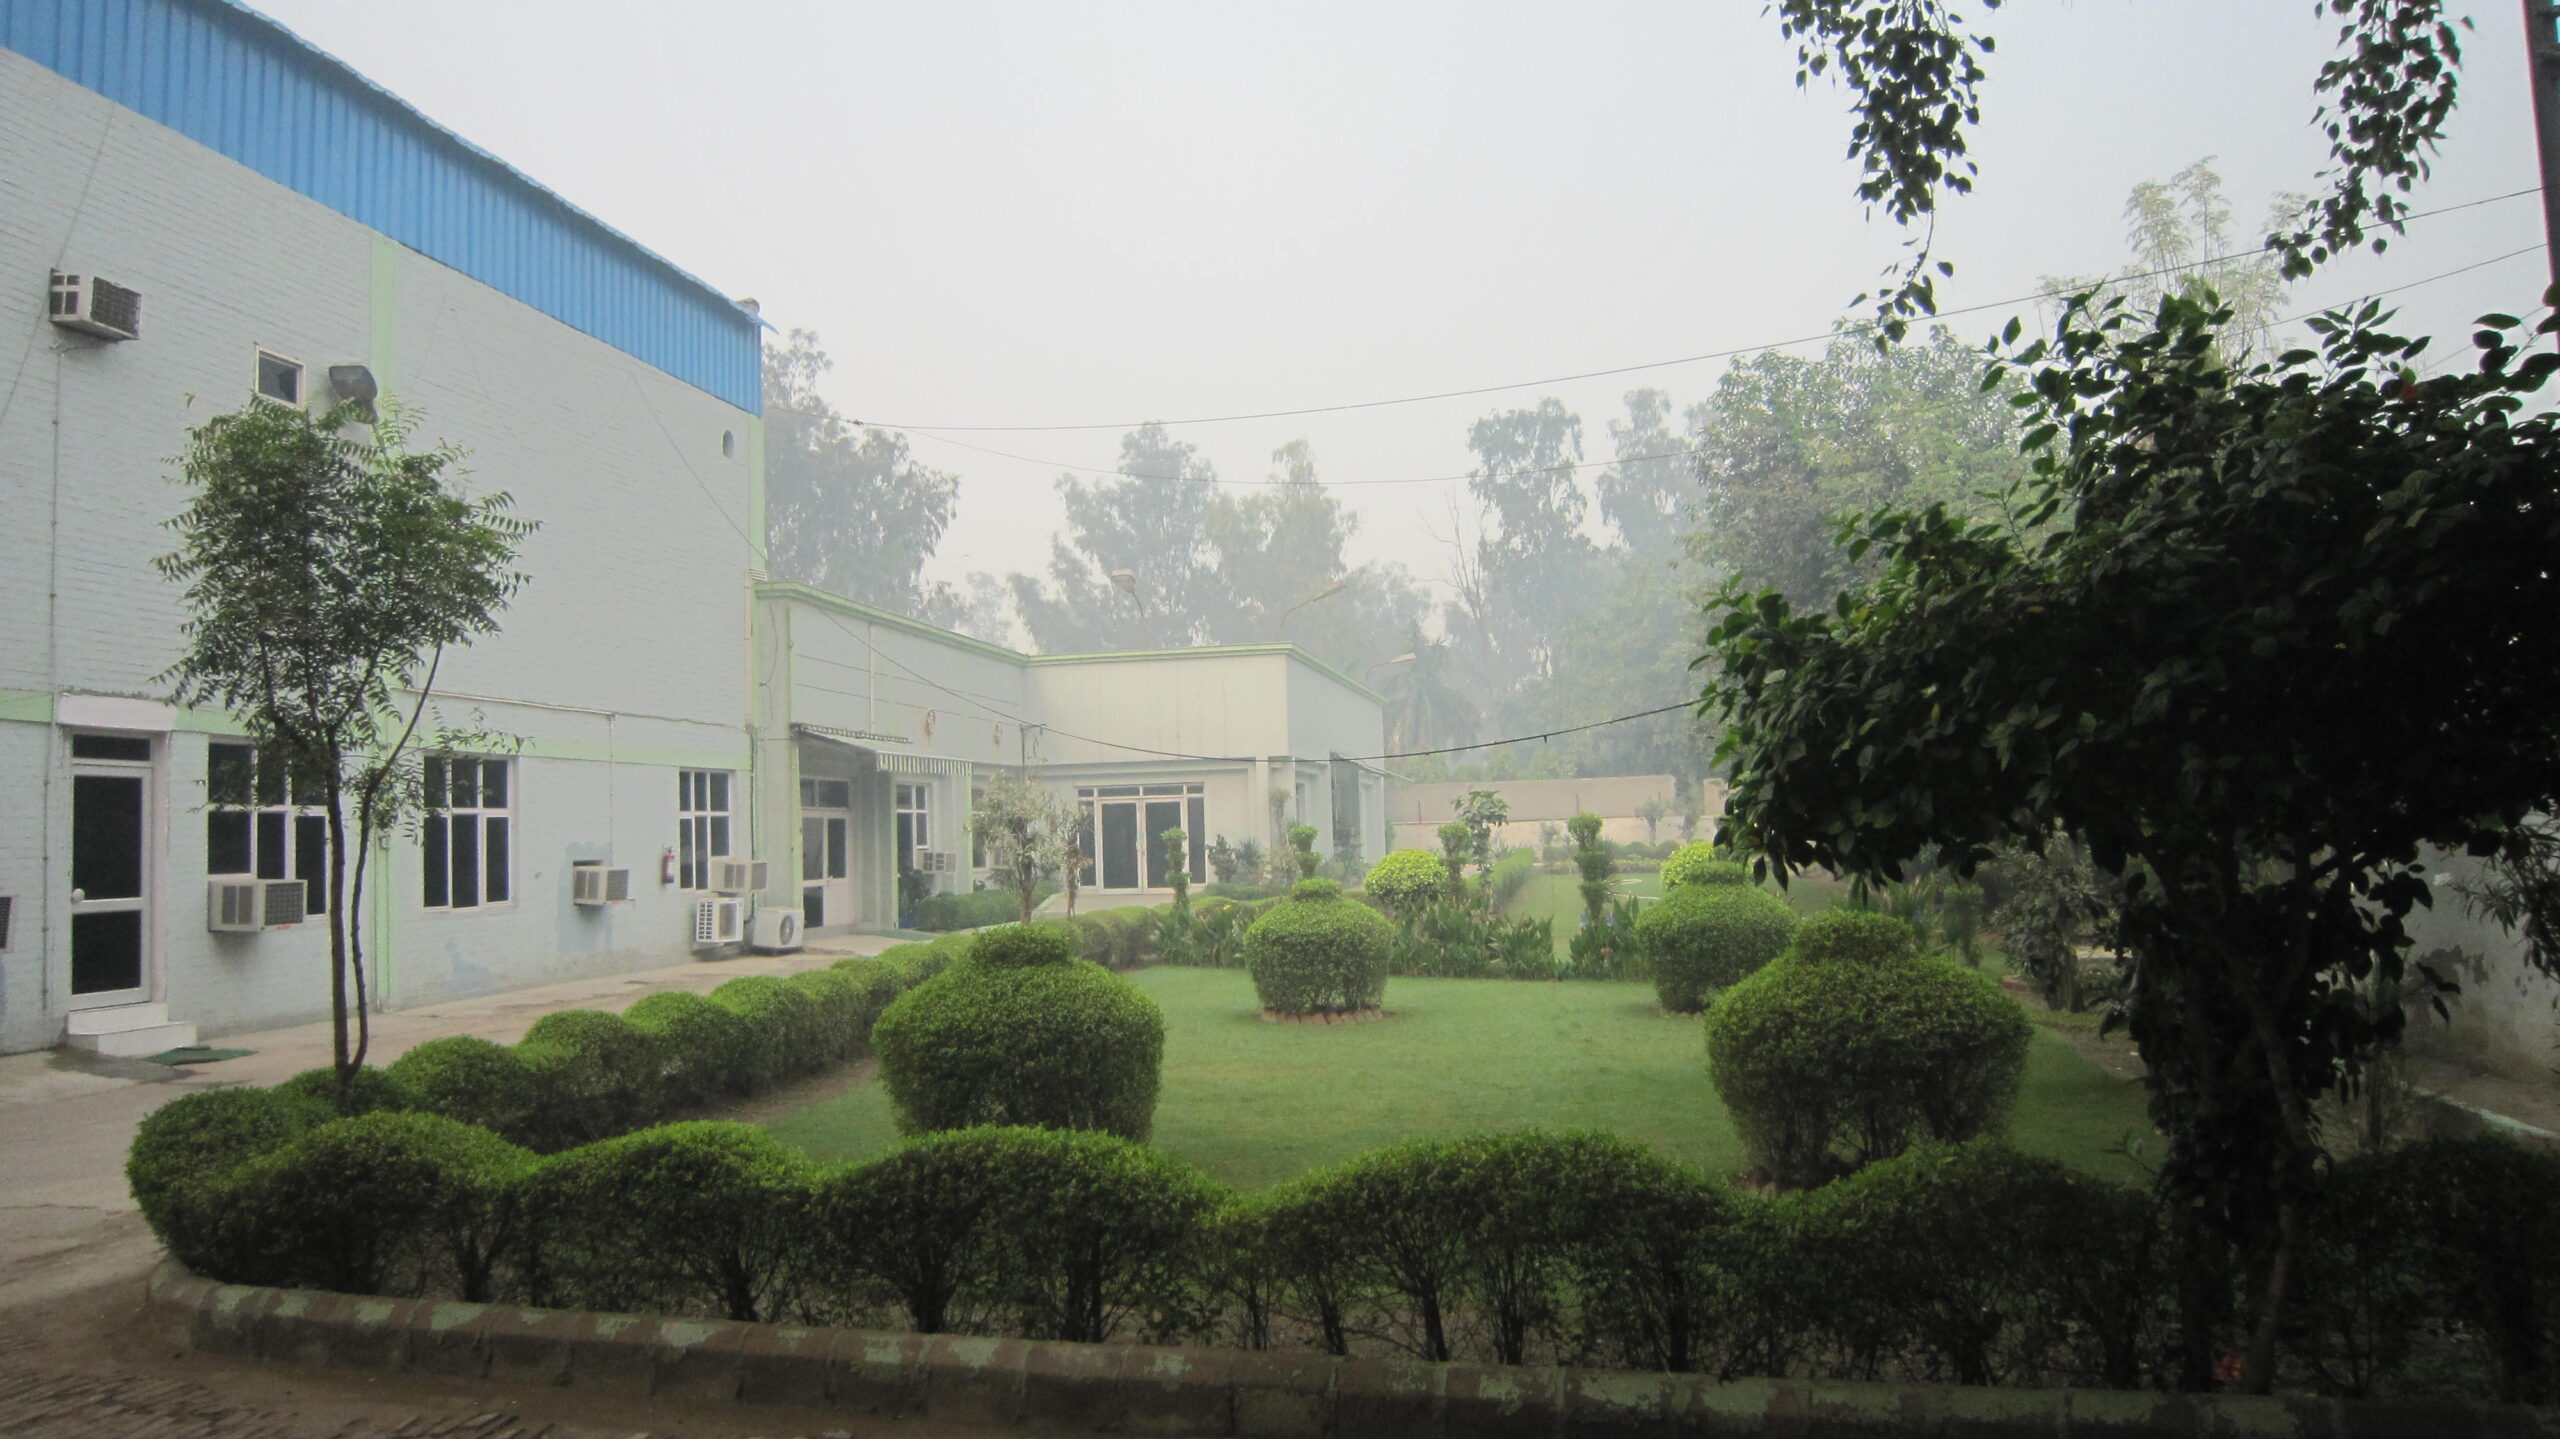 Sahibabad Plant